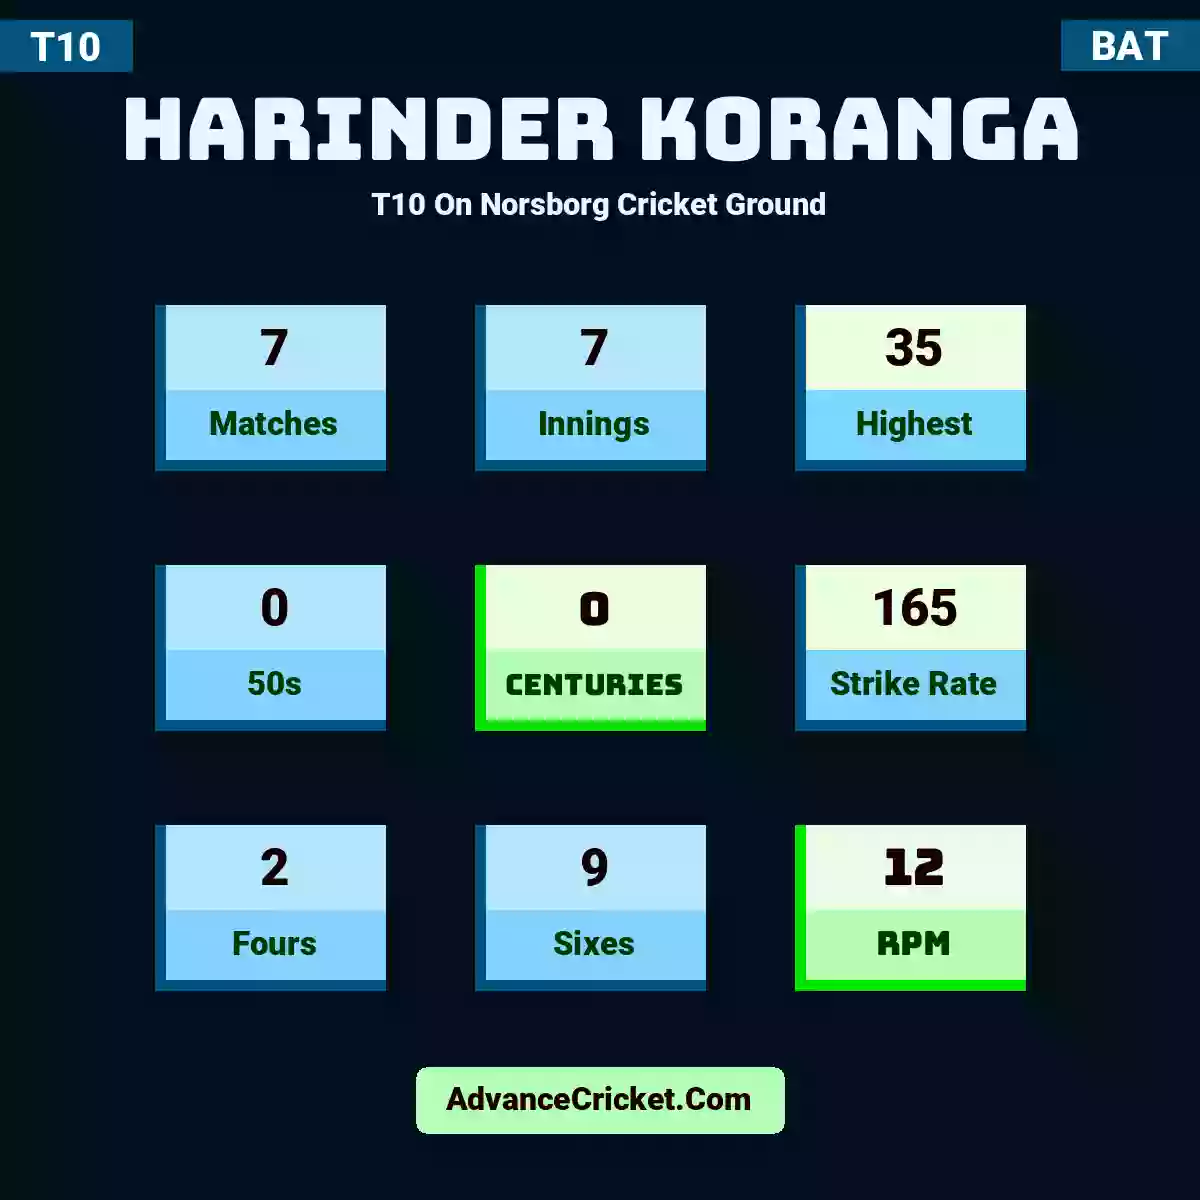 Harinder Koranga T10  On Norsborg Cricket Ground, Harinder Koranga played 7 matches, scored 35 runs as highest, 0 half-centuries, and 0 centuries, with a strike rate of 165. H.Koranga hit 2 fours and 9 sixes, with an RPM of 12.